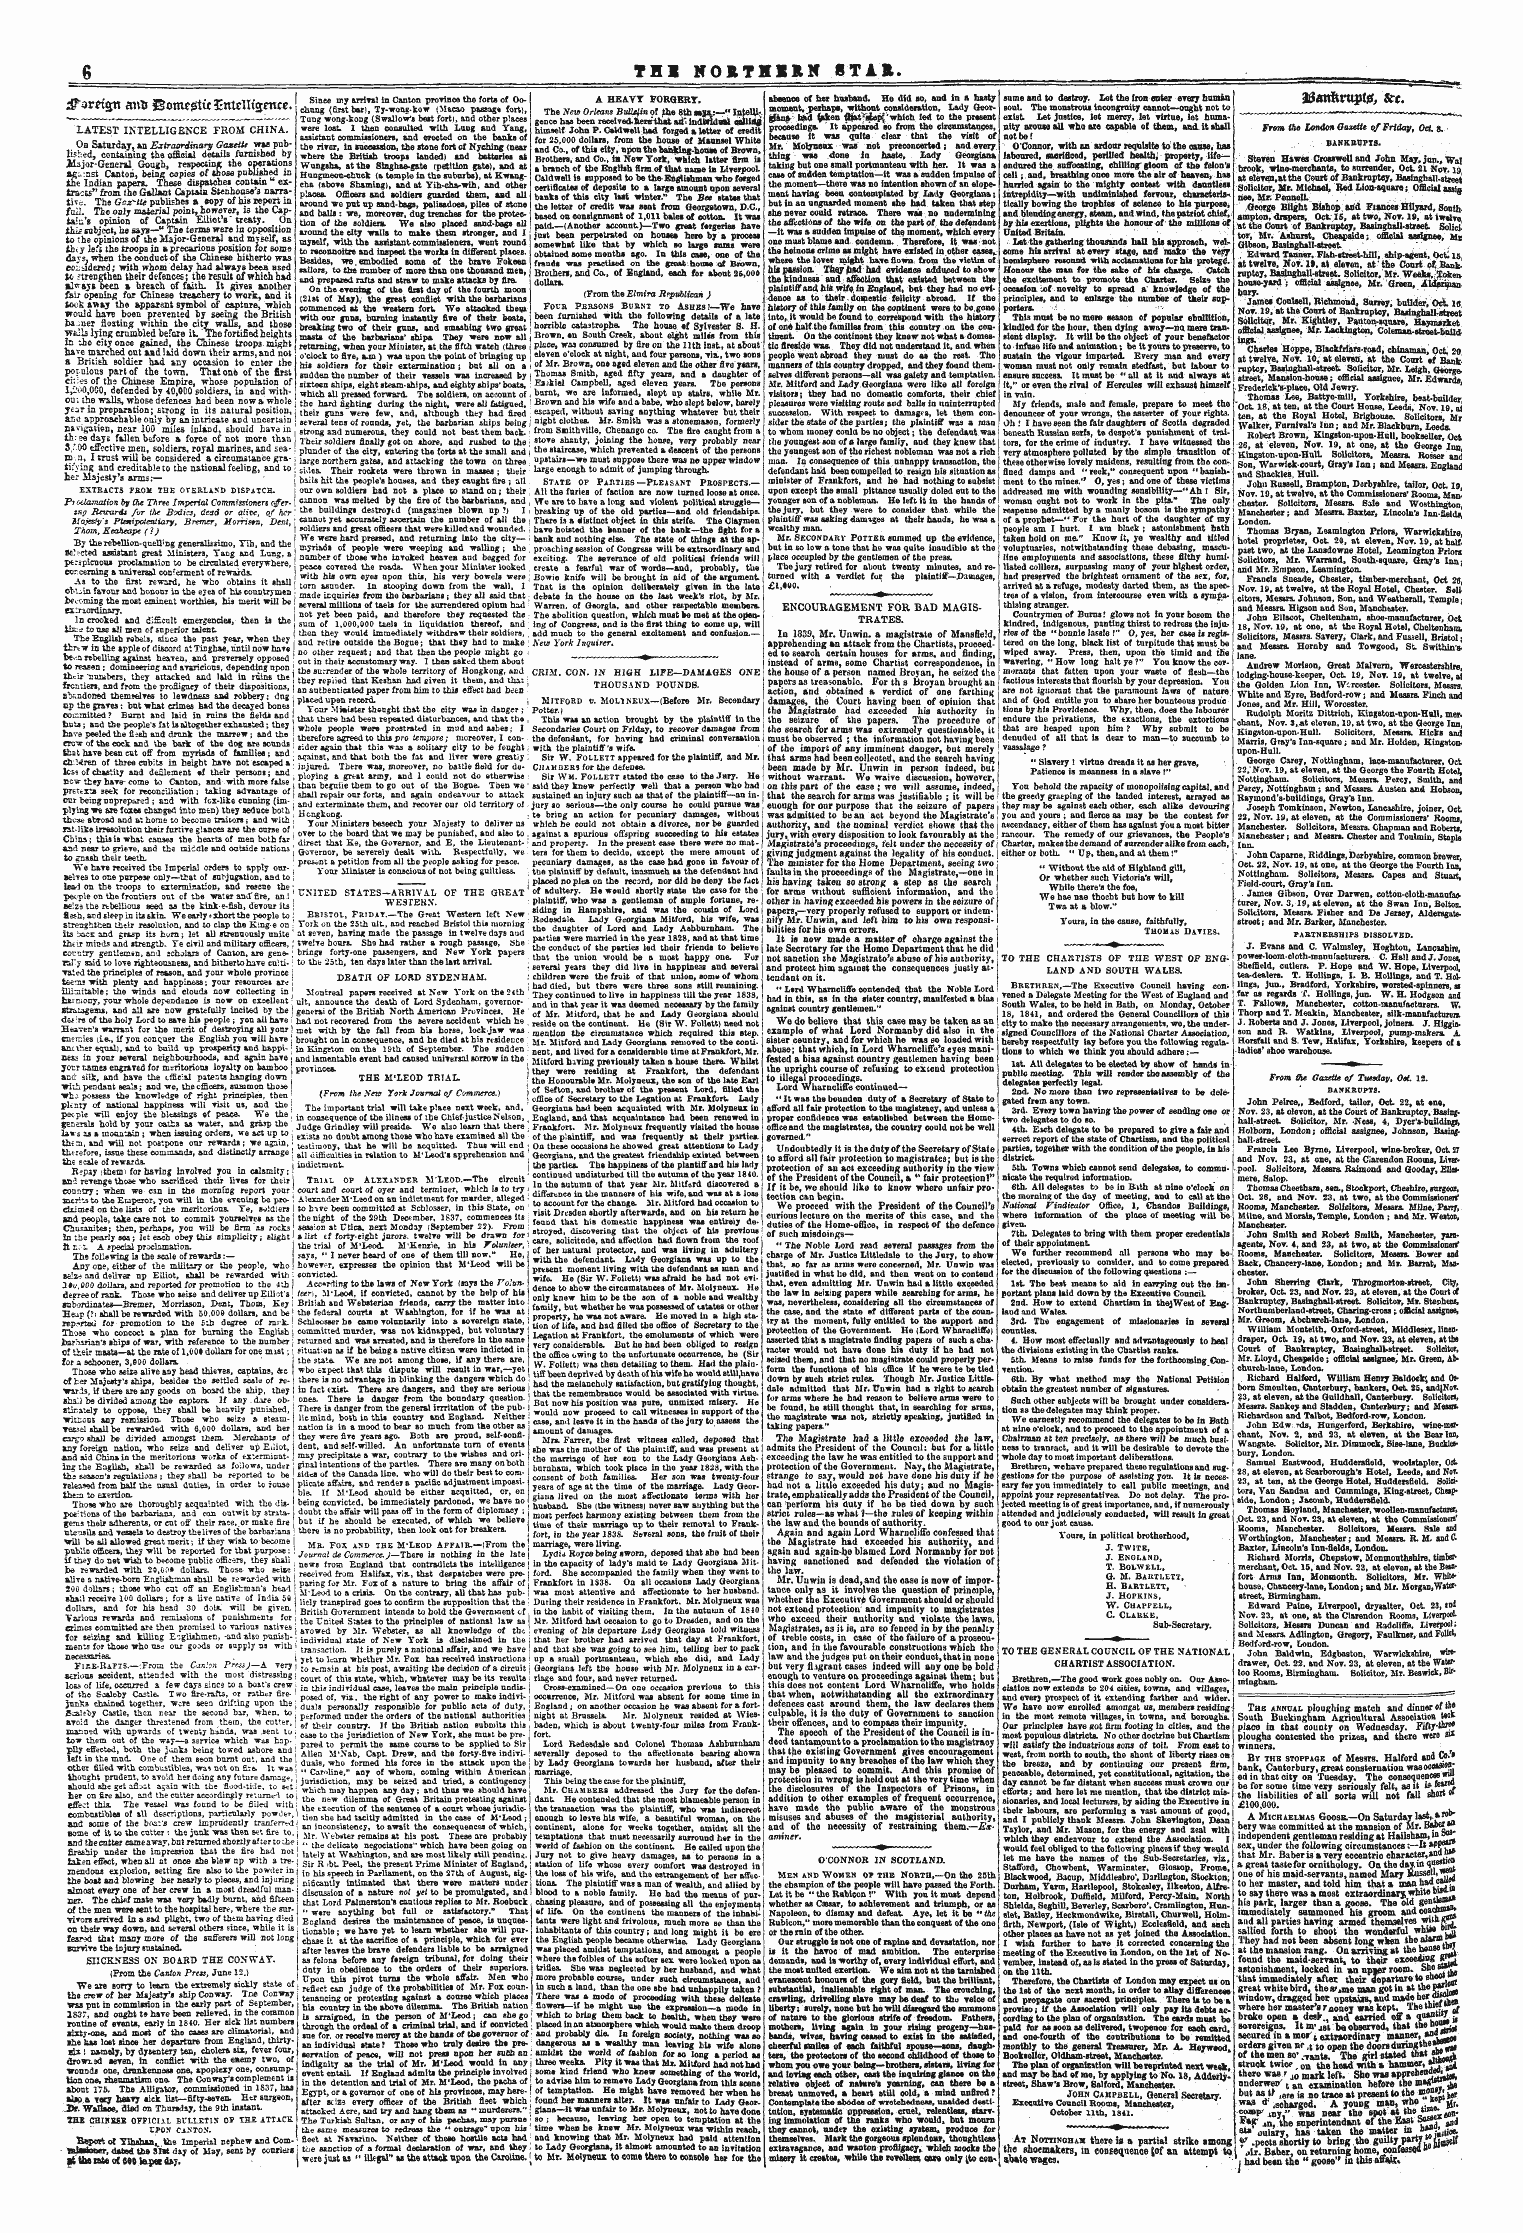 Northern Star (1837-1852): jS F Y, 1st edition - ^ Artujn Antr ^Ome Stu Setttelltsenw